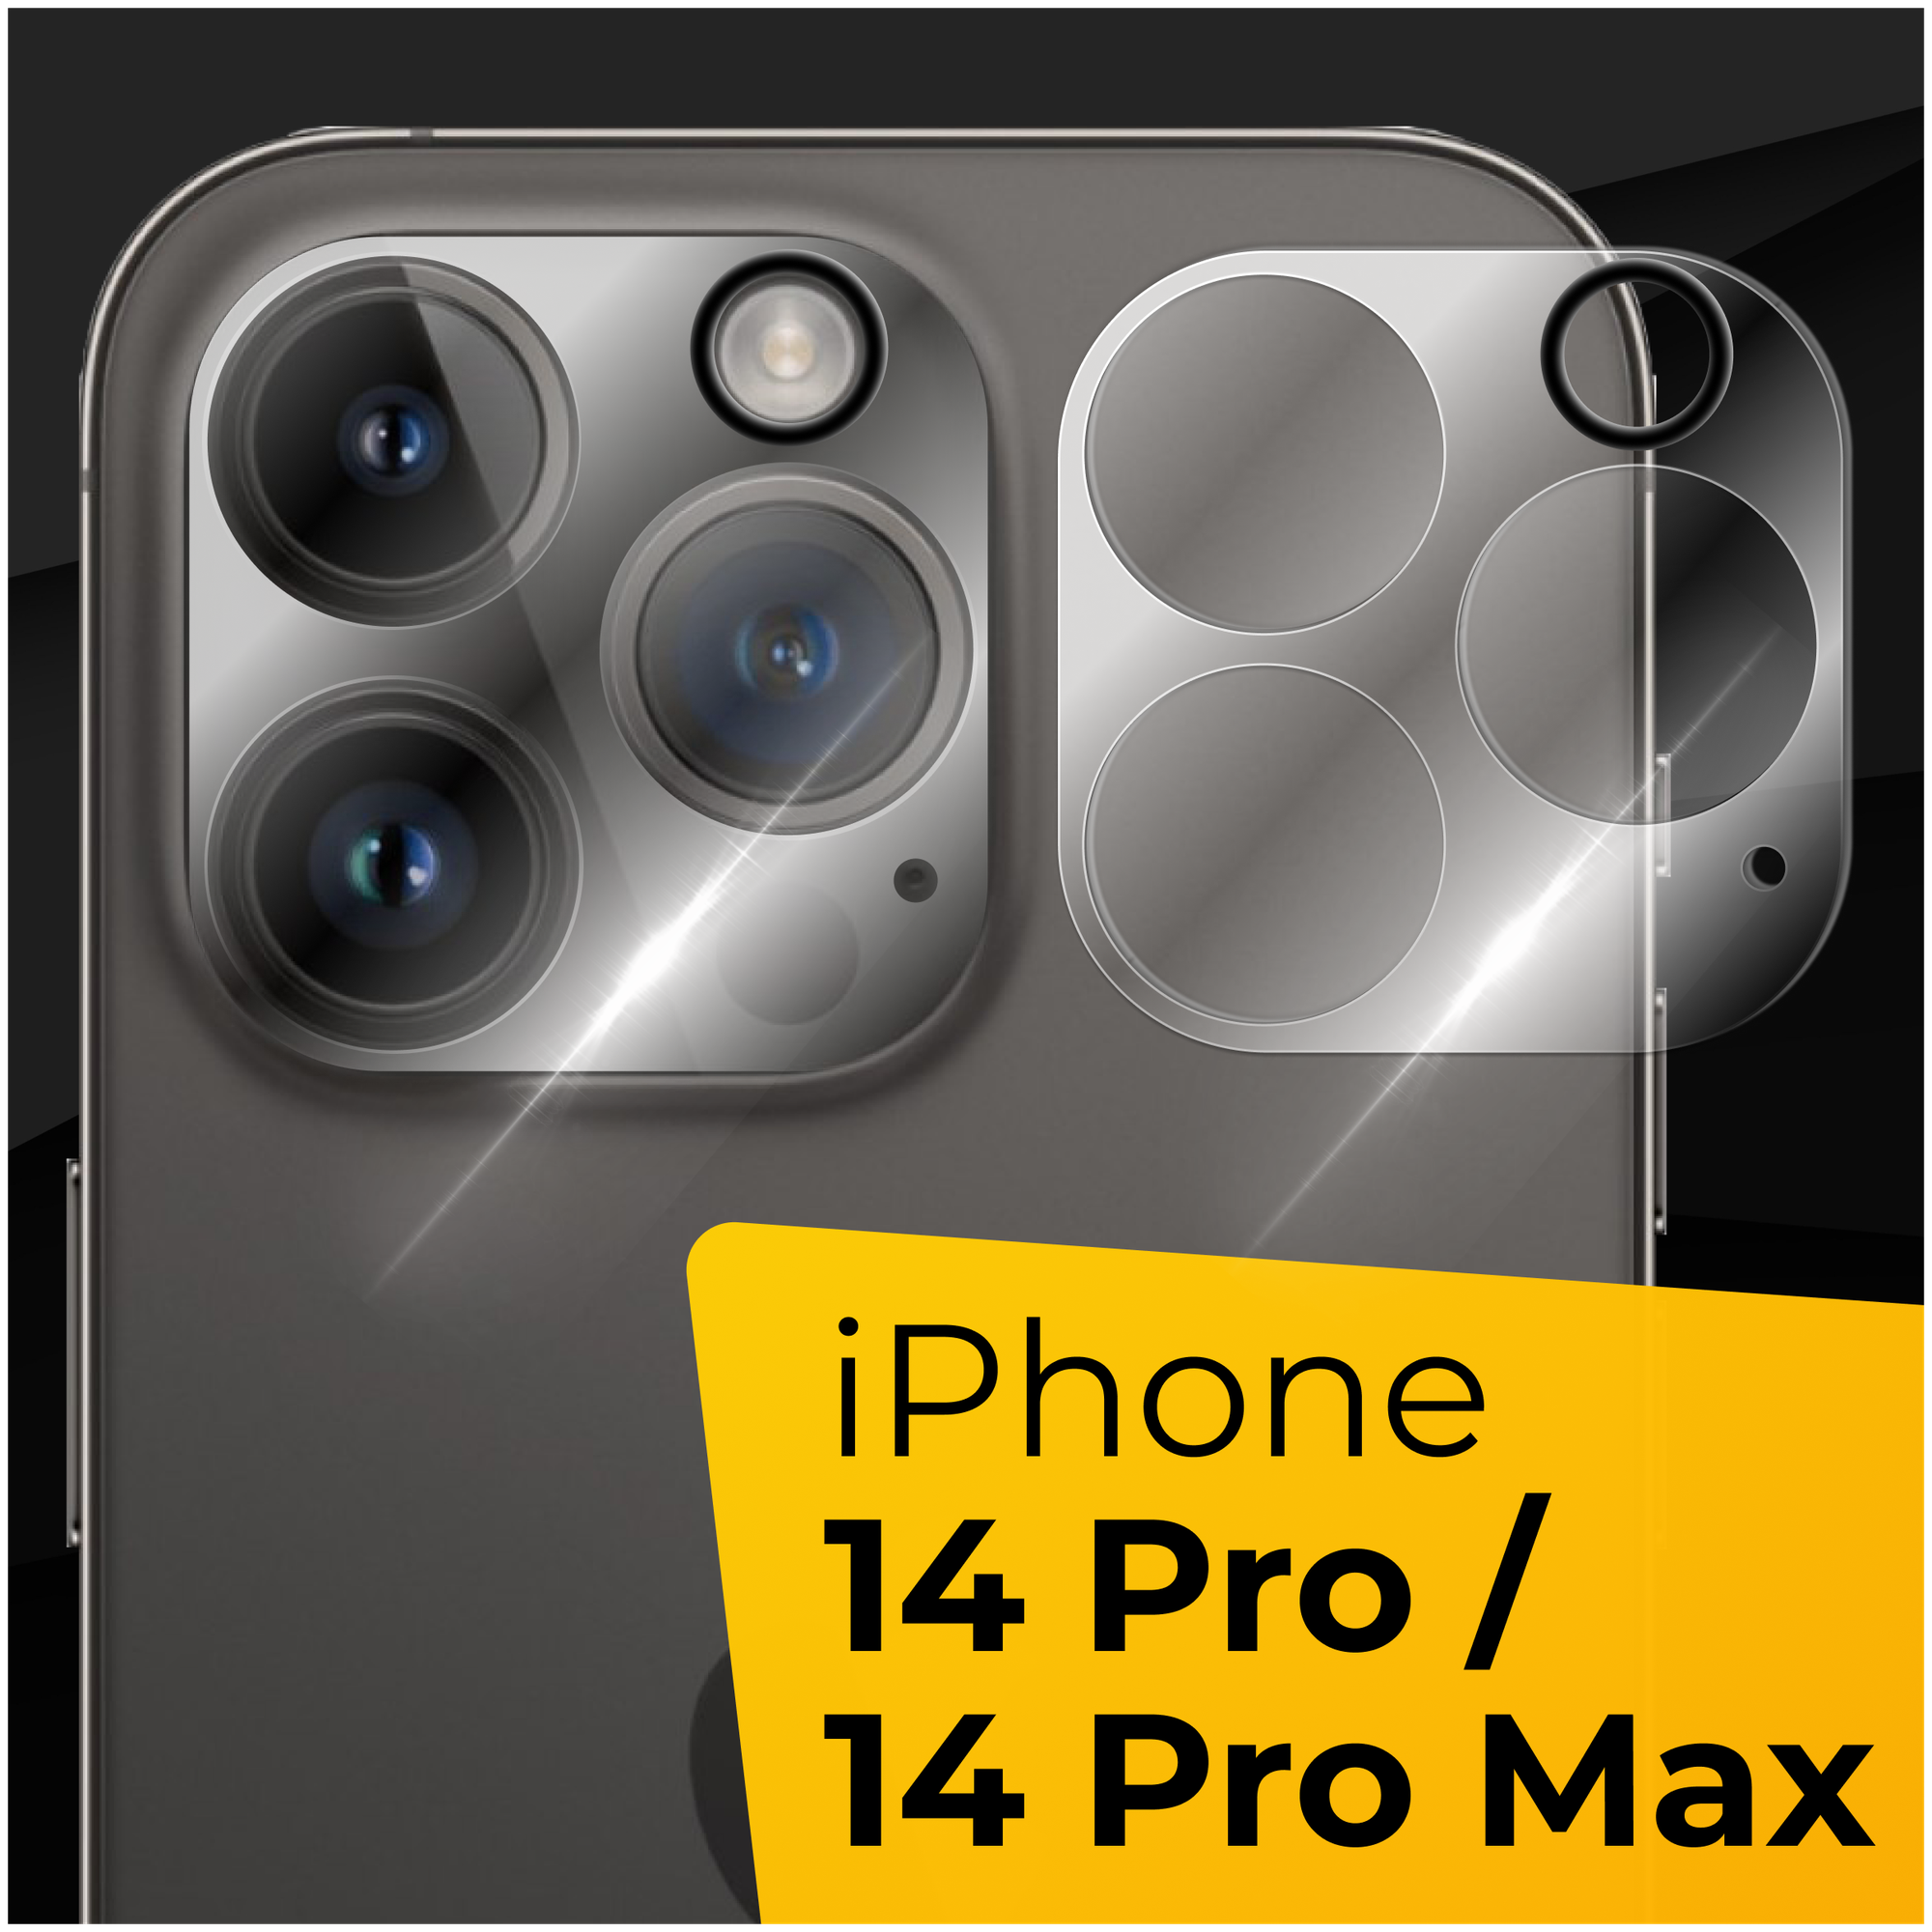 Противоударное защитное стекло для камеры телефона Apple iPhone 14 Pro и 14 Pro Max / Прозрачное стекло на камеру Эпл Айфон 14 Про и 14 Про Макс